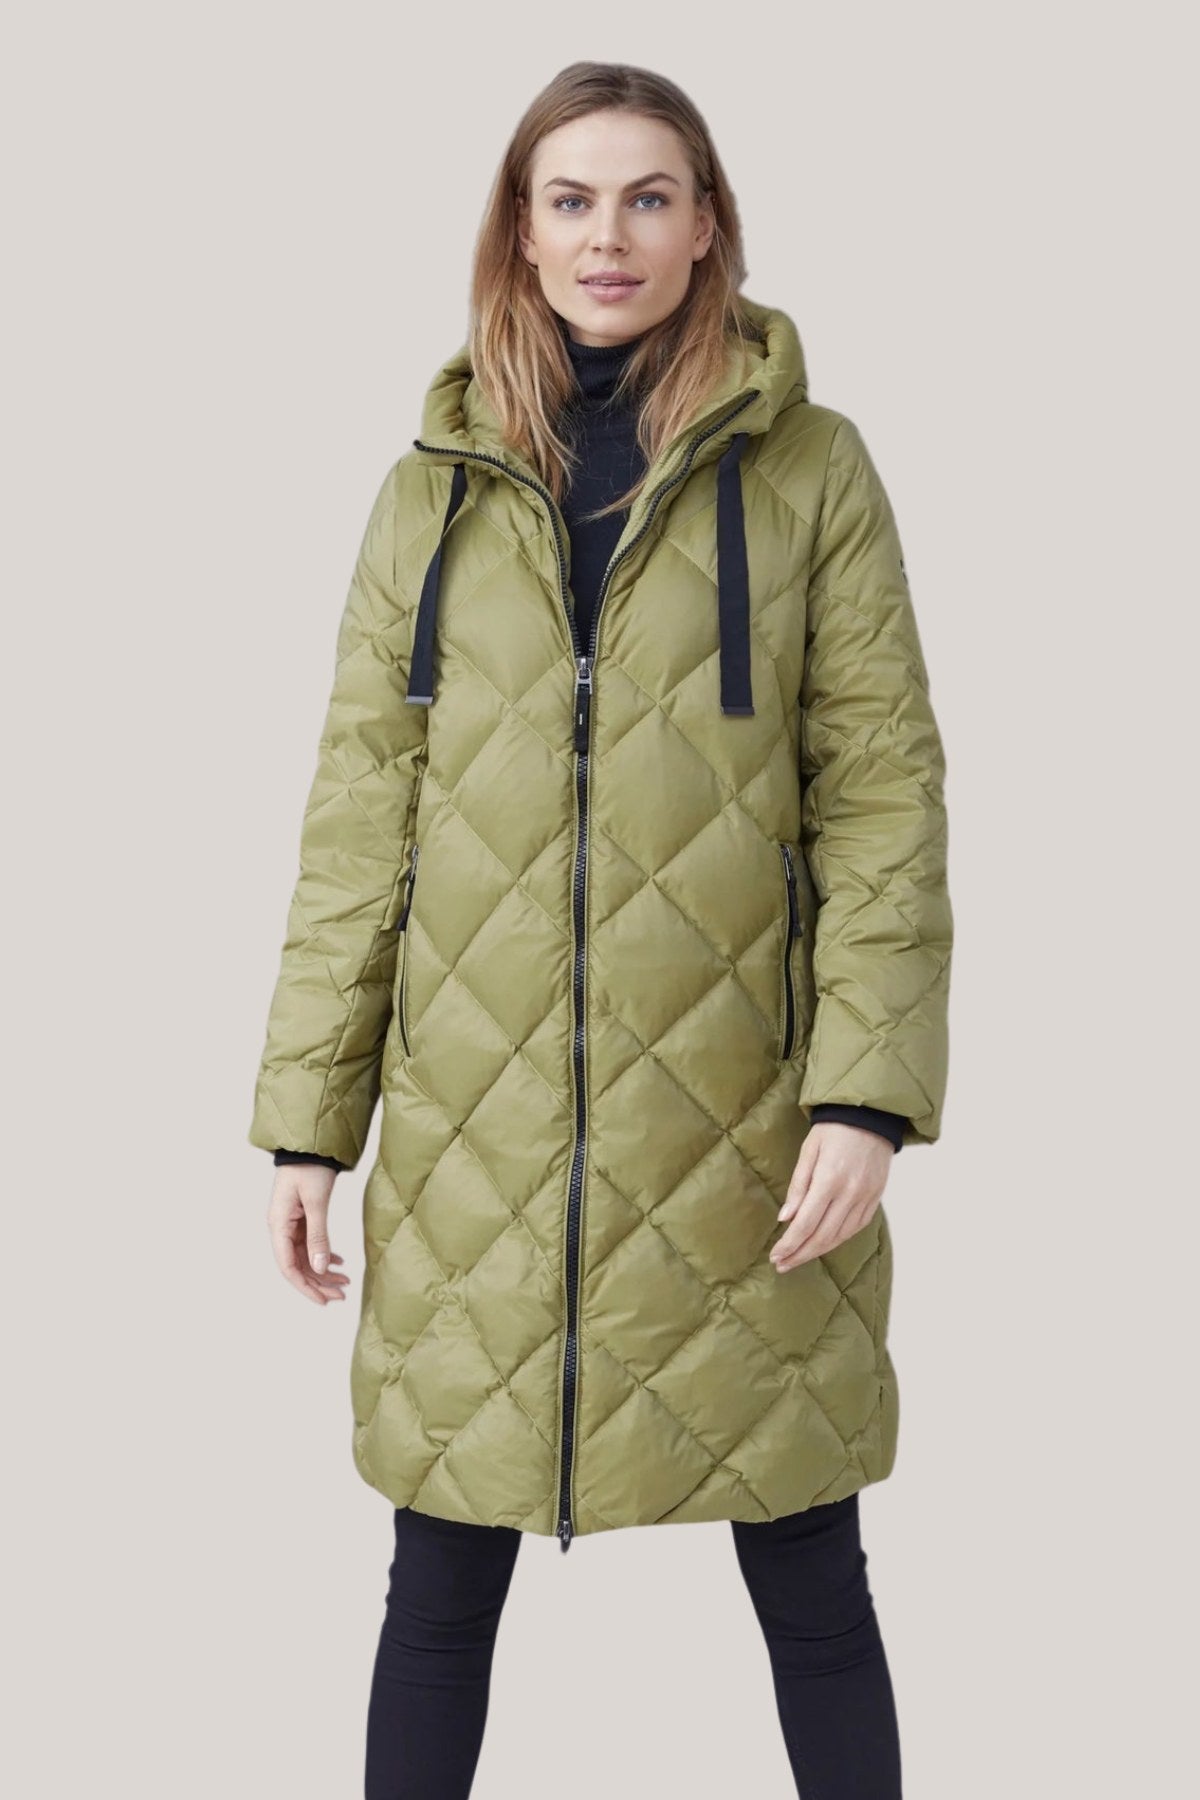 Scyoekwg Clearance Womens Winter Jacket Plus Size Togo